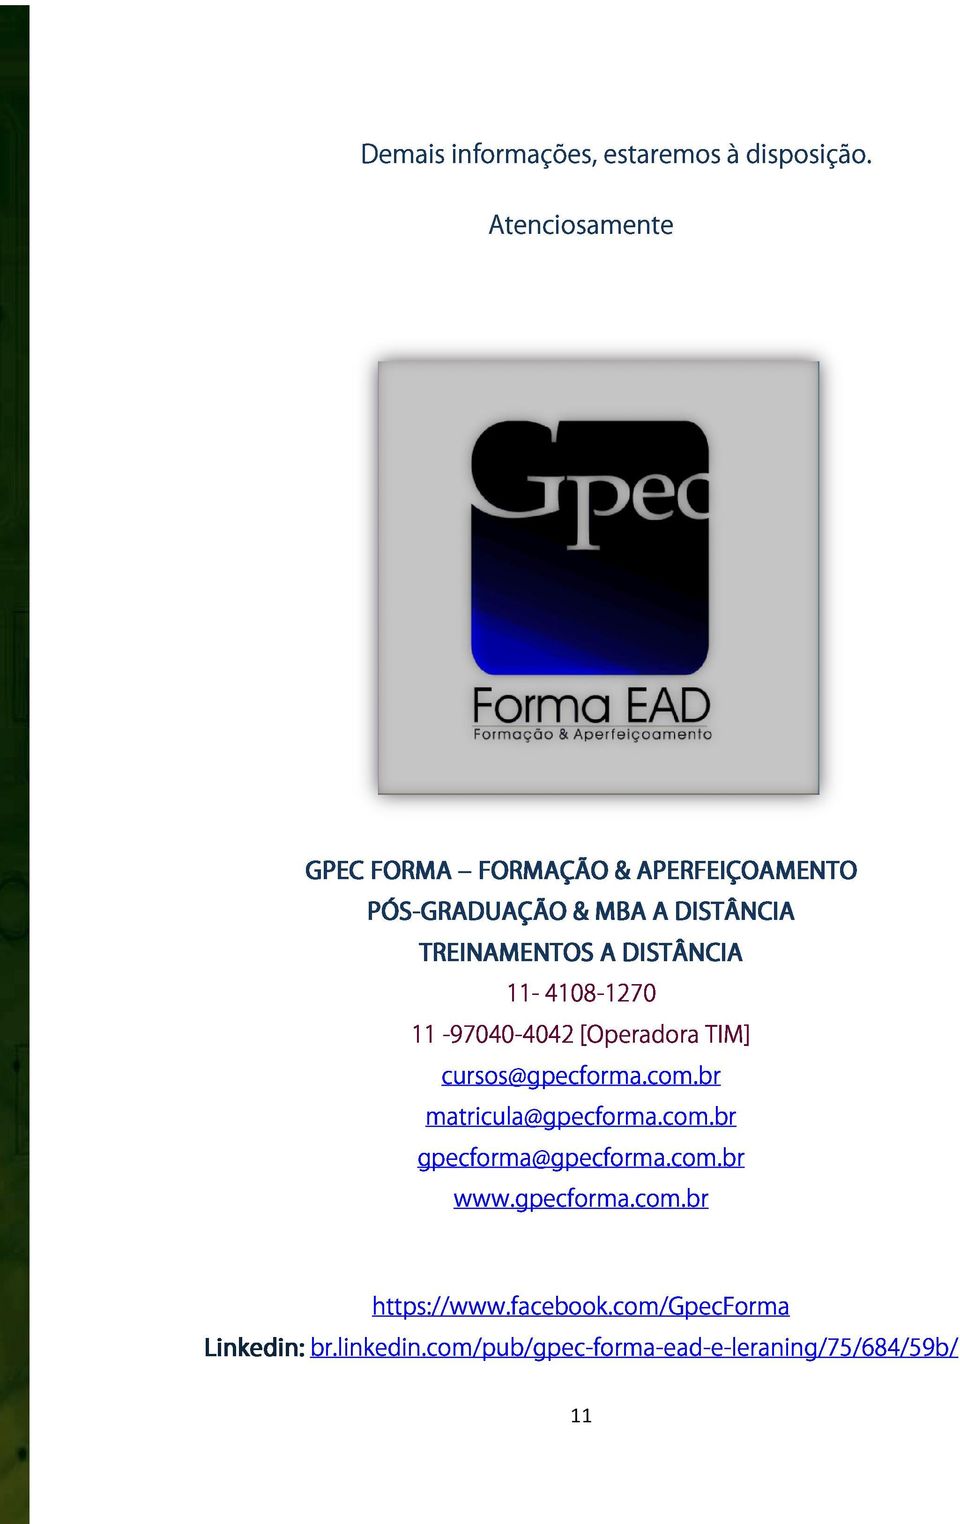 11-97040-4042[Operadora TIM] gpecforma@gpecforma.com.br matricula@gpecforma.com.br cursos@gpecforma.com.br www.